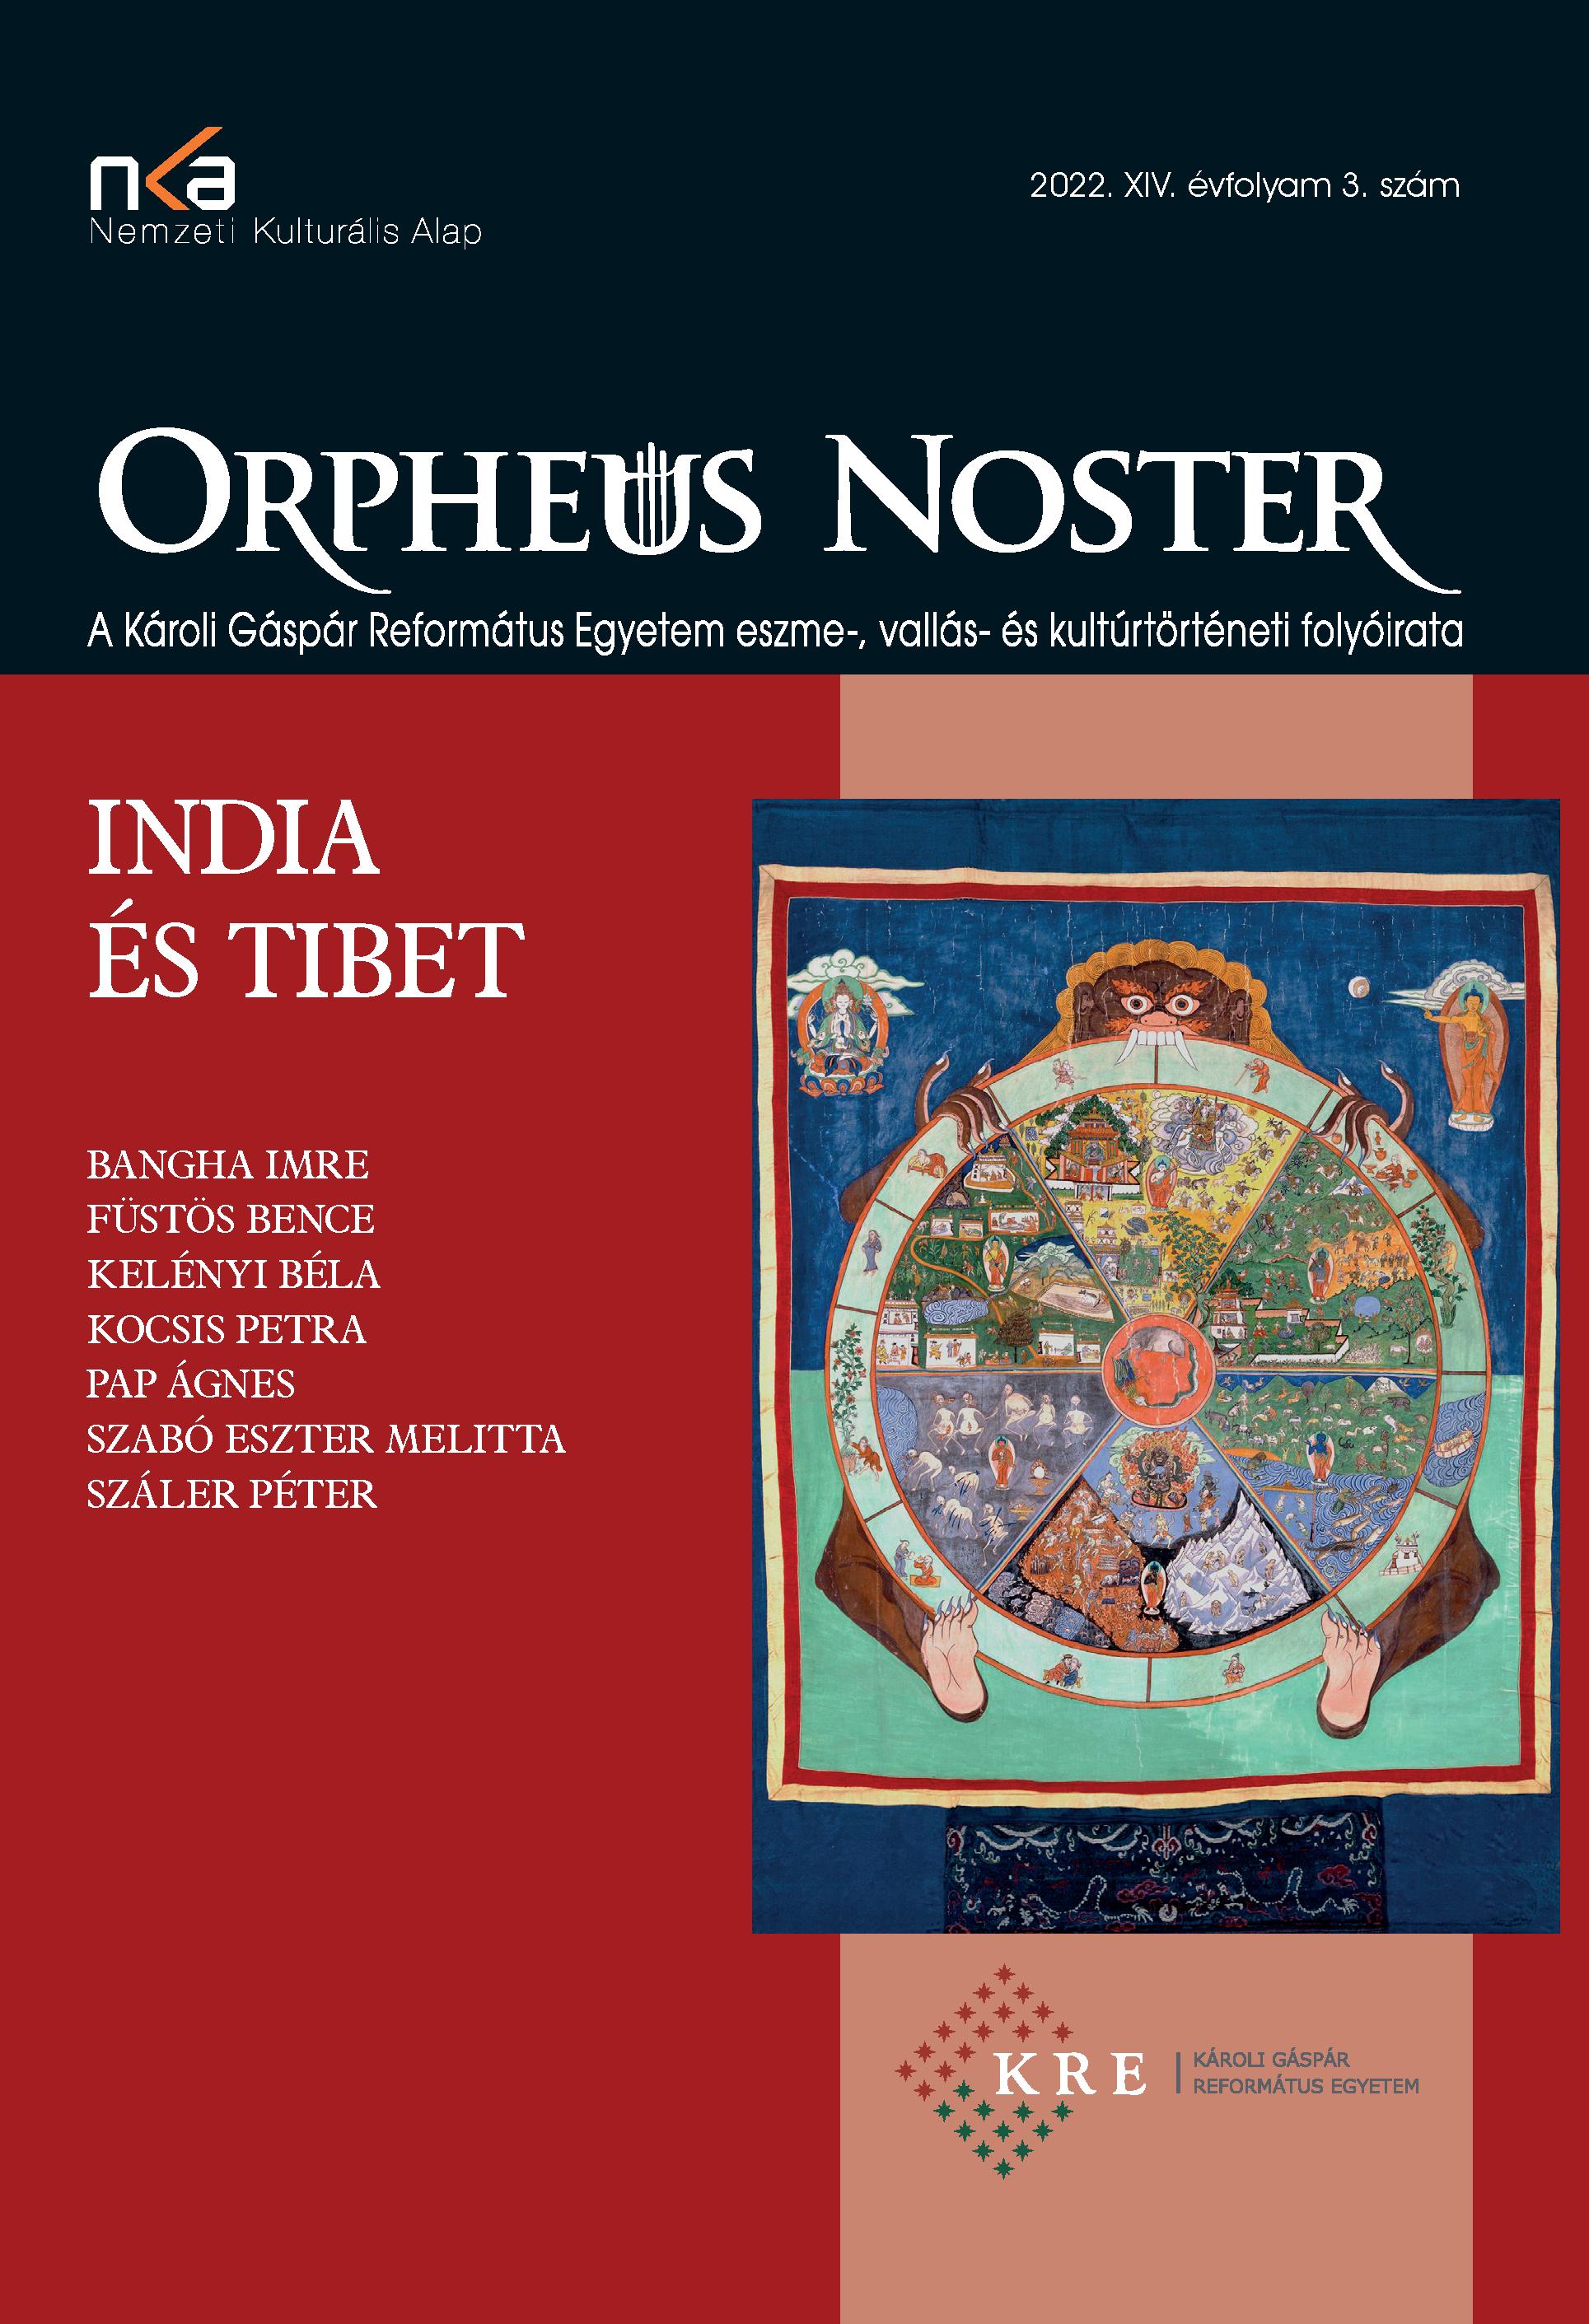 From Samsara to Nirvana (and back): Buddhist Aspects in Rudyard Kipling’s Novel “Kim” Cover Image